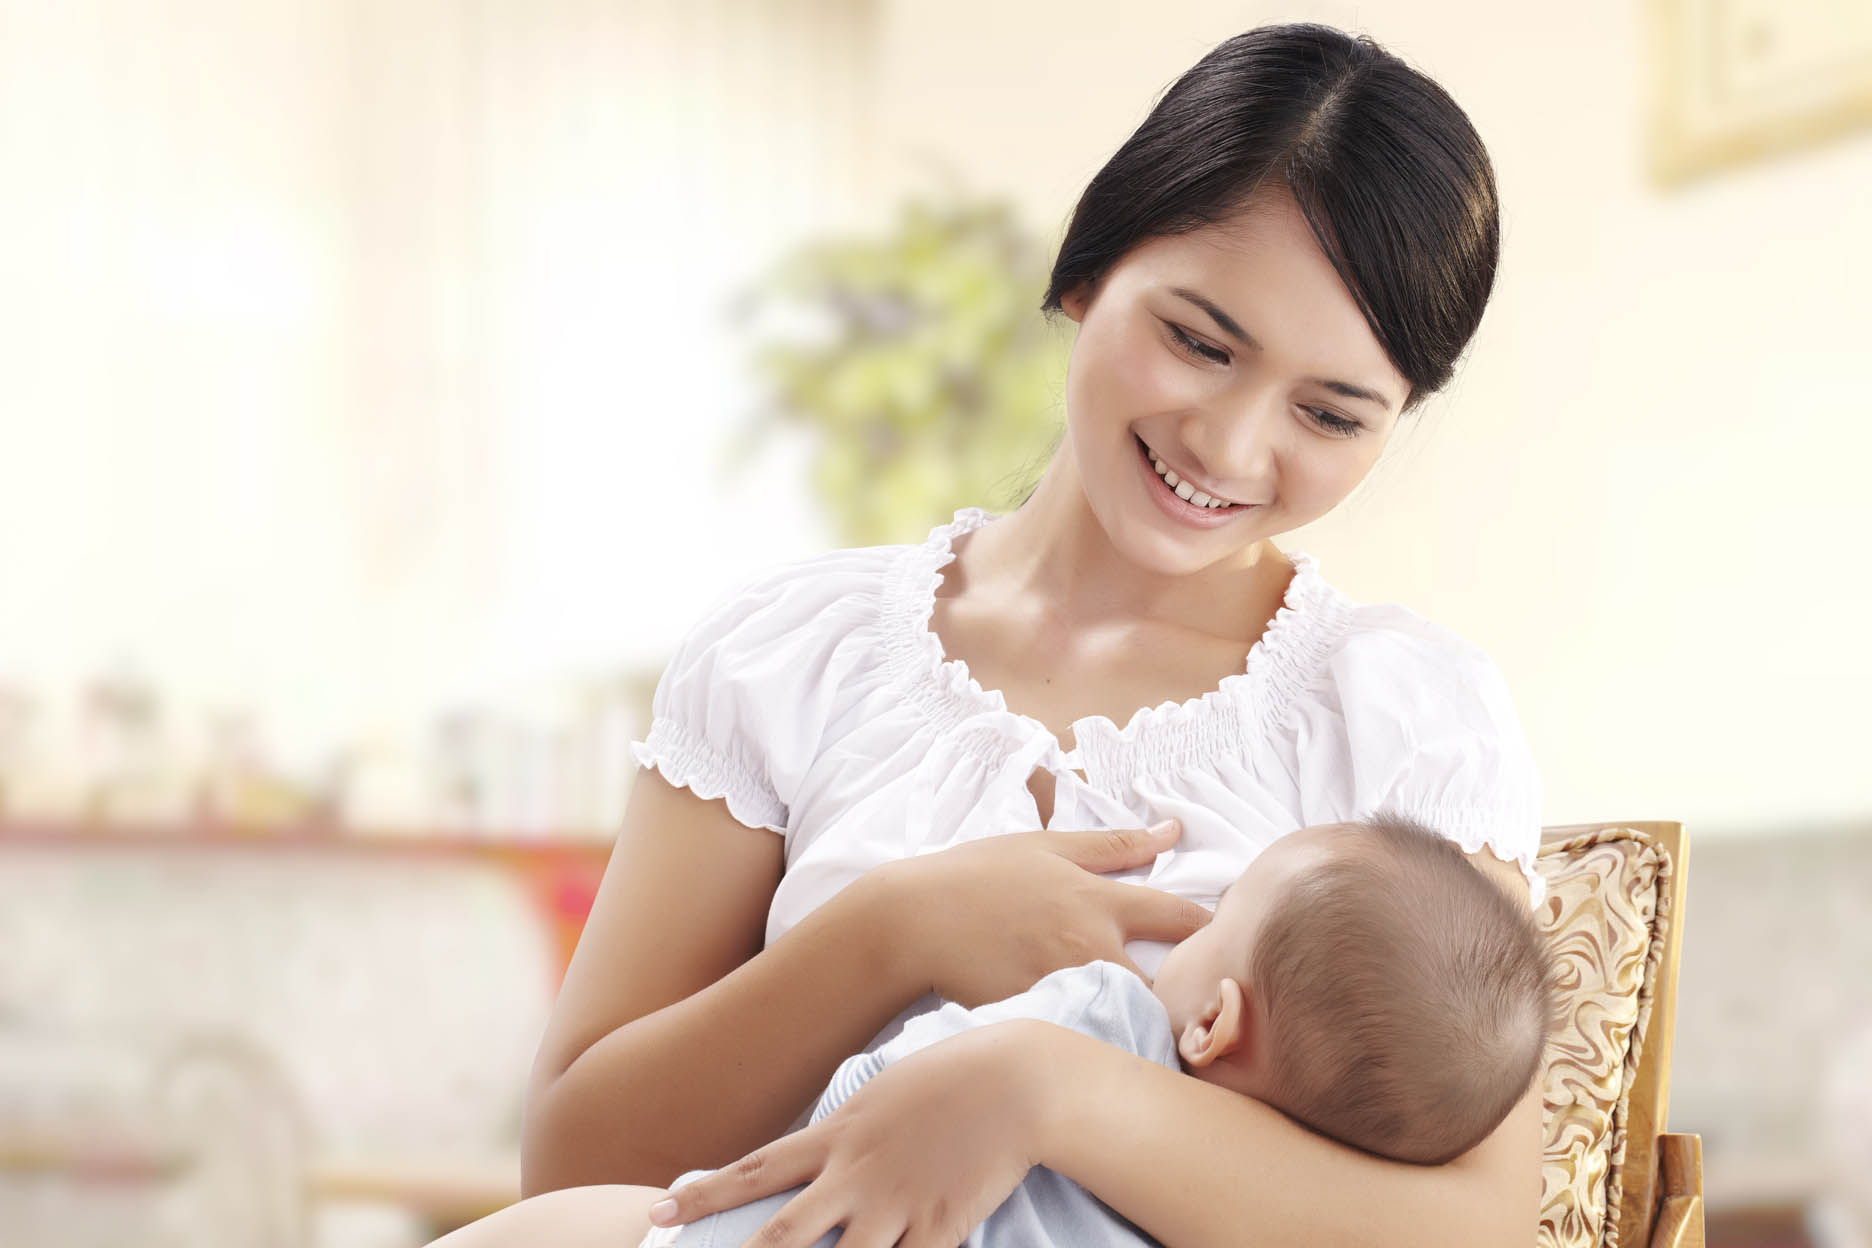 ASI, 'Mukjizat' Bagi Ibu dan Bayi | Health & Nutrition Services